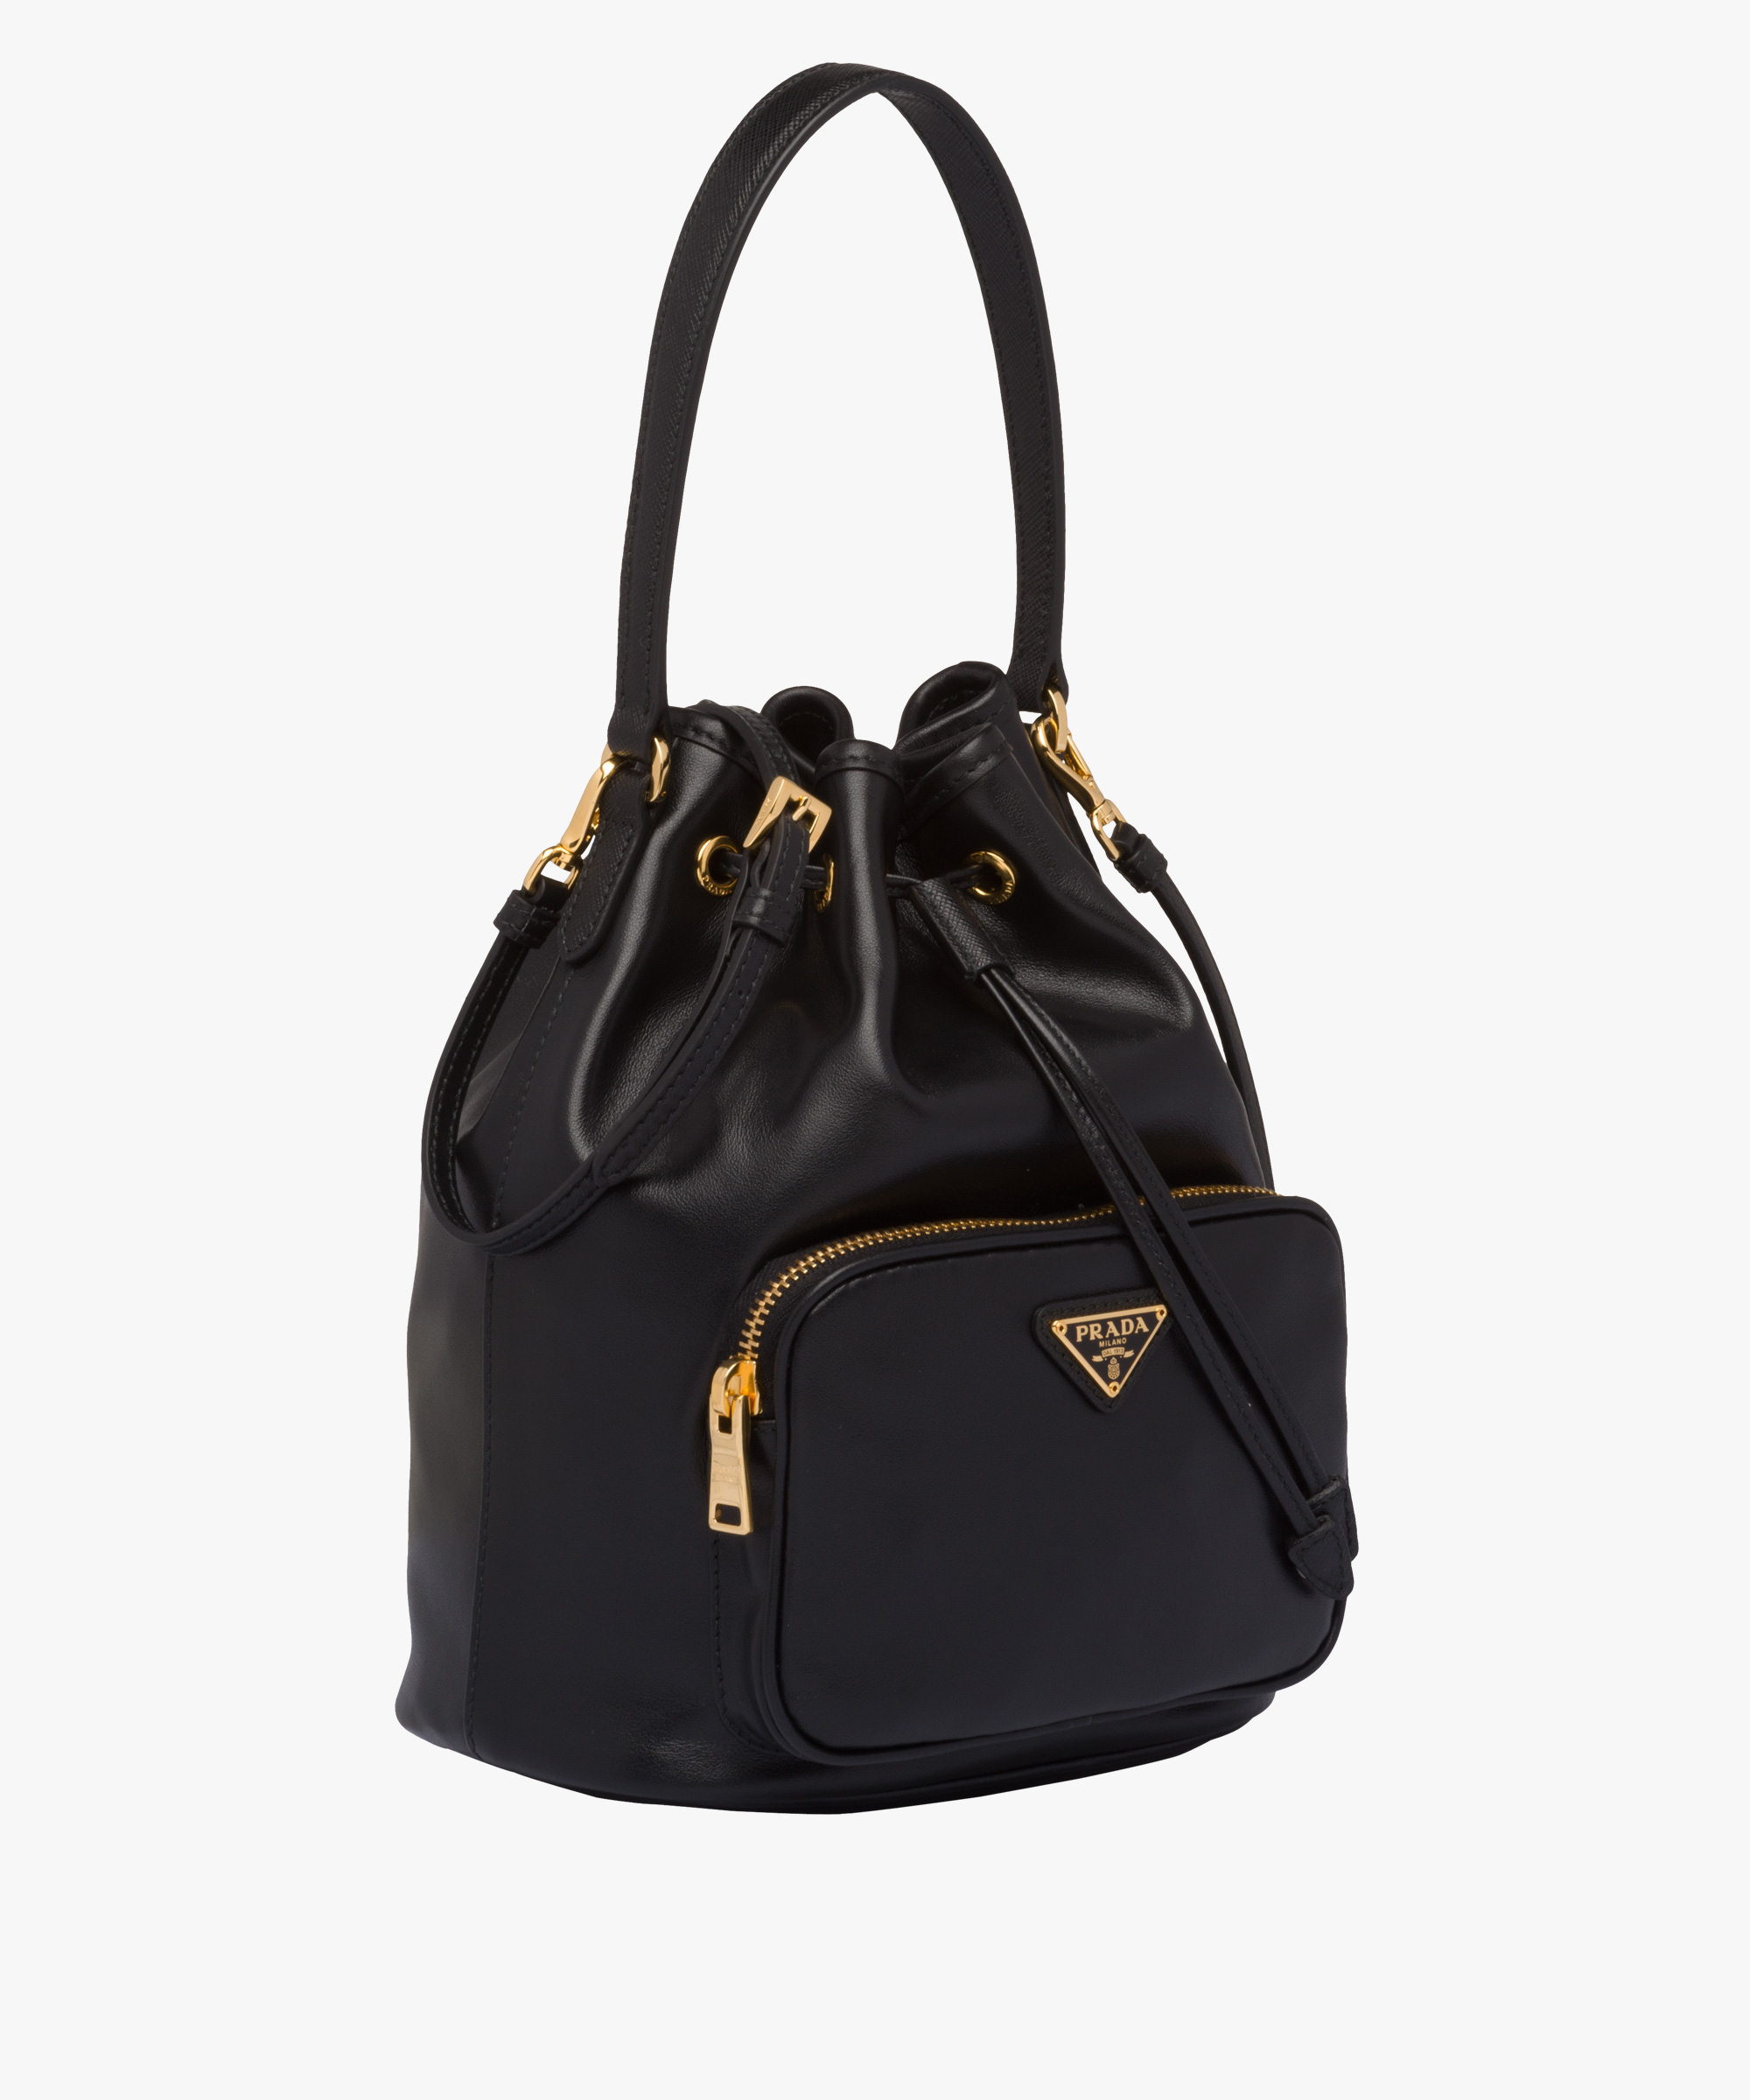 Prada Duet leather shoulder bag | Prada